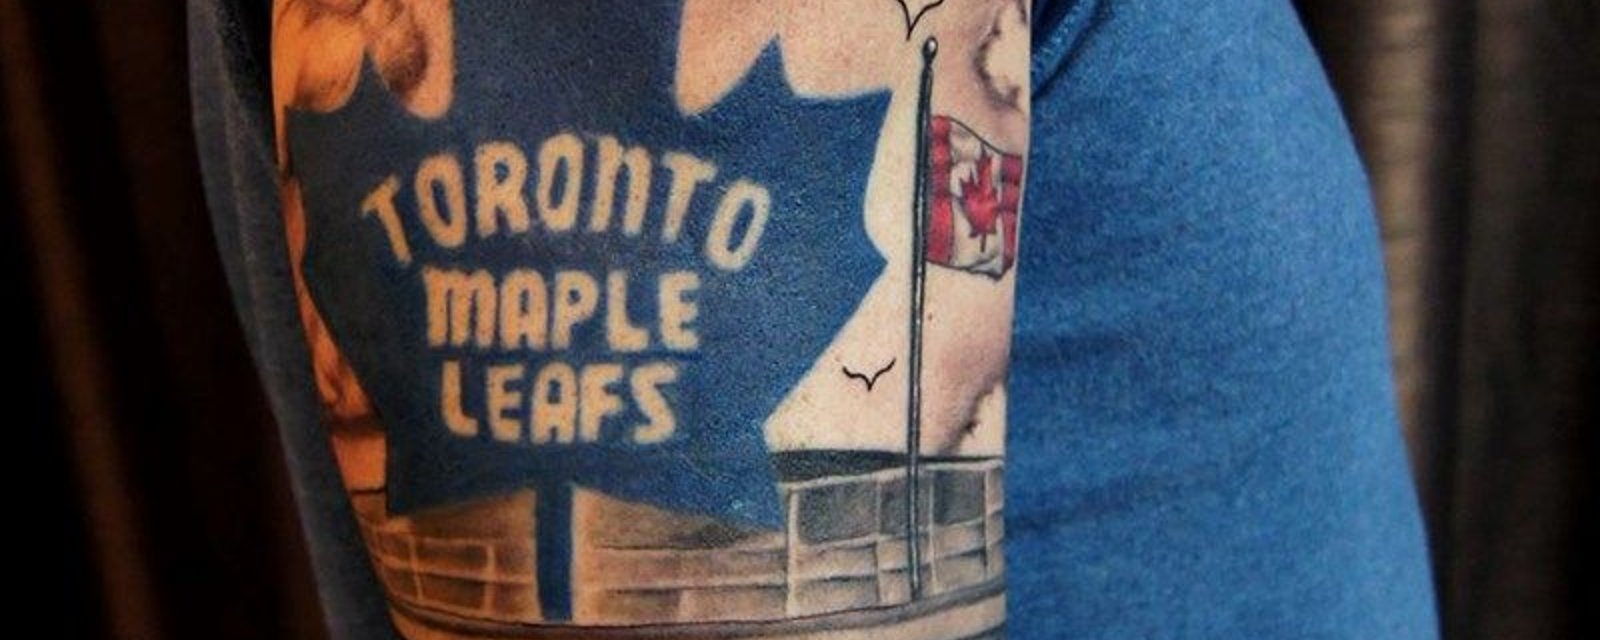 Study reveals Leafs have most tattooed sports team logo